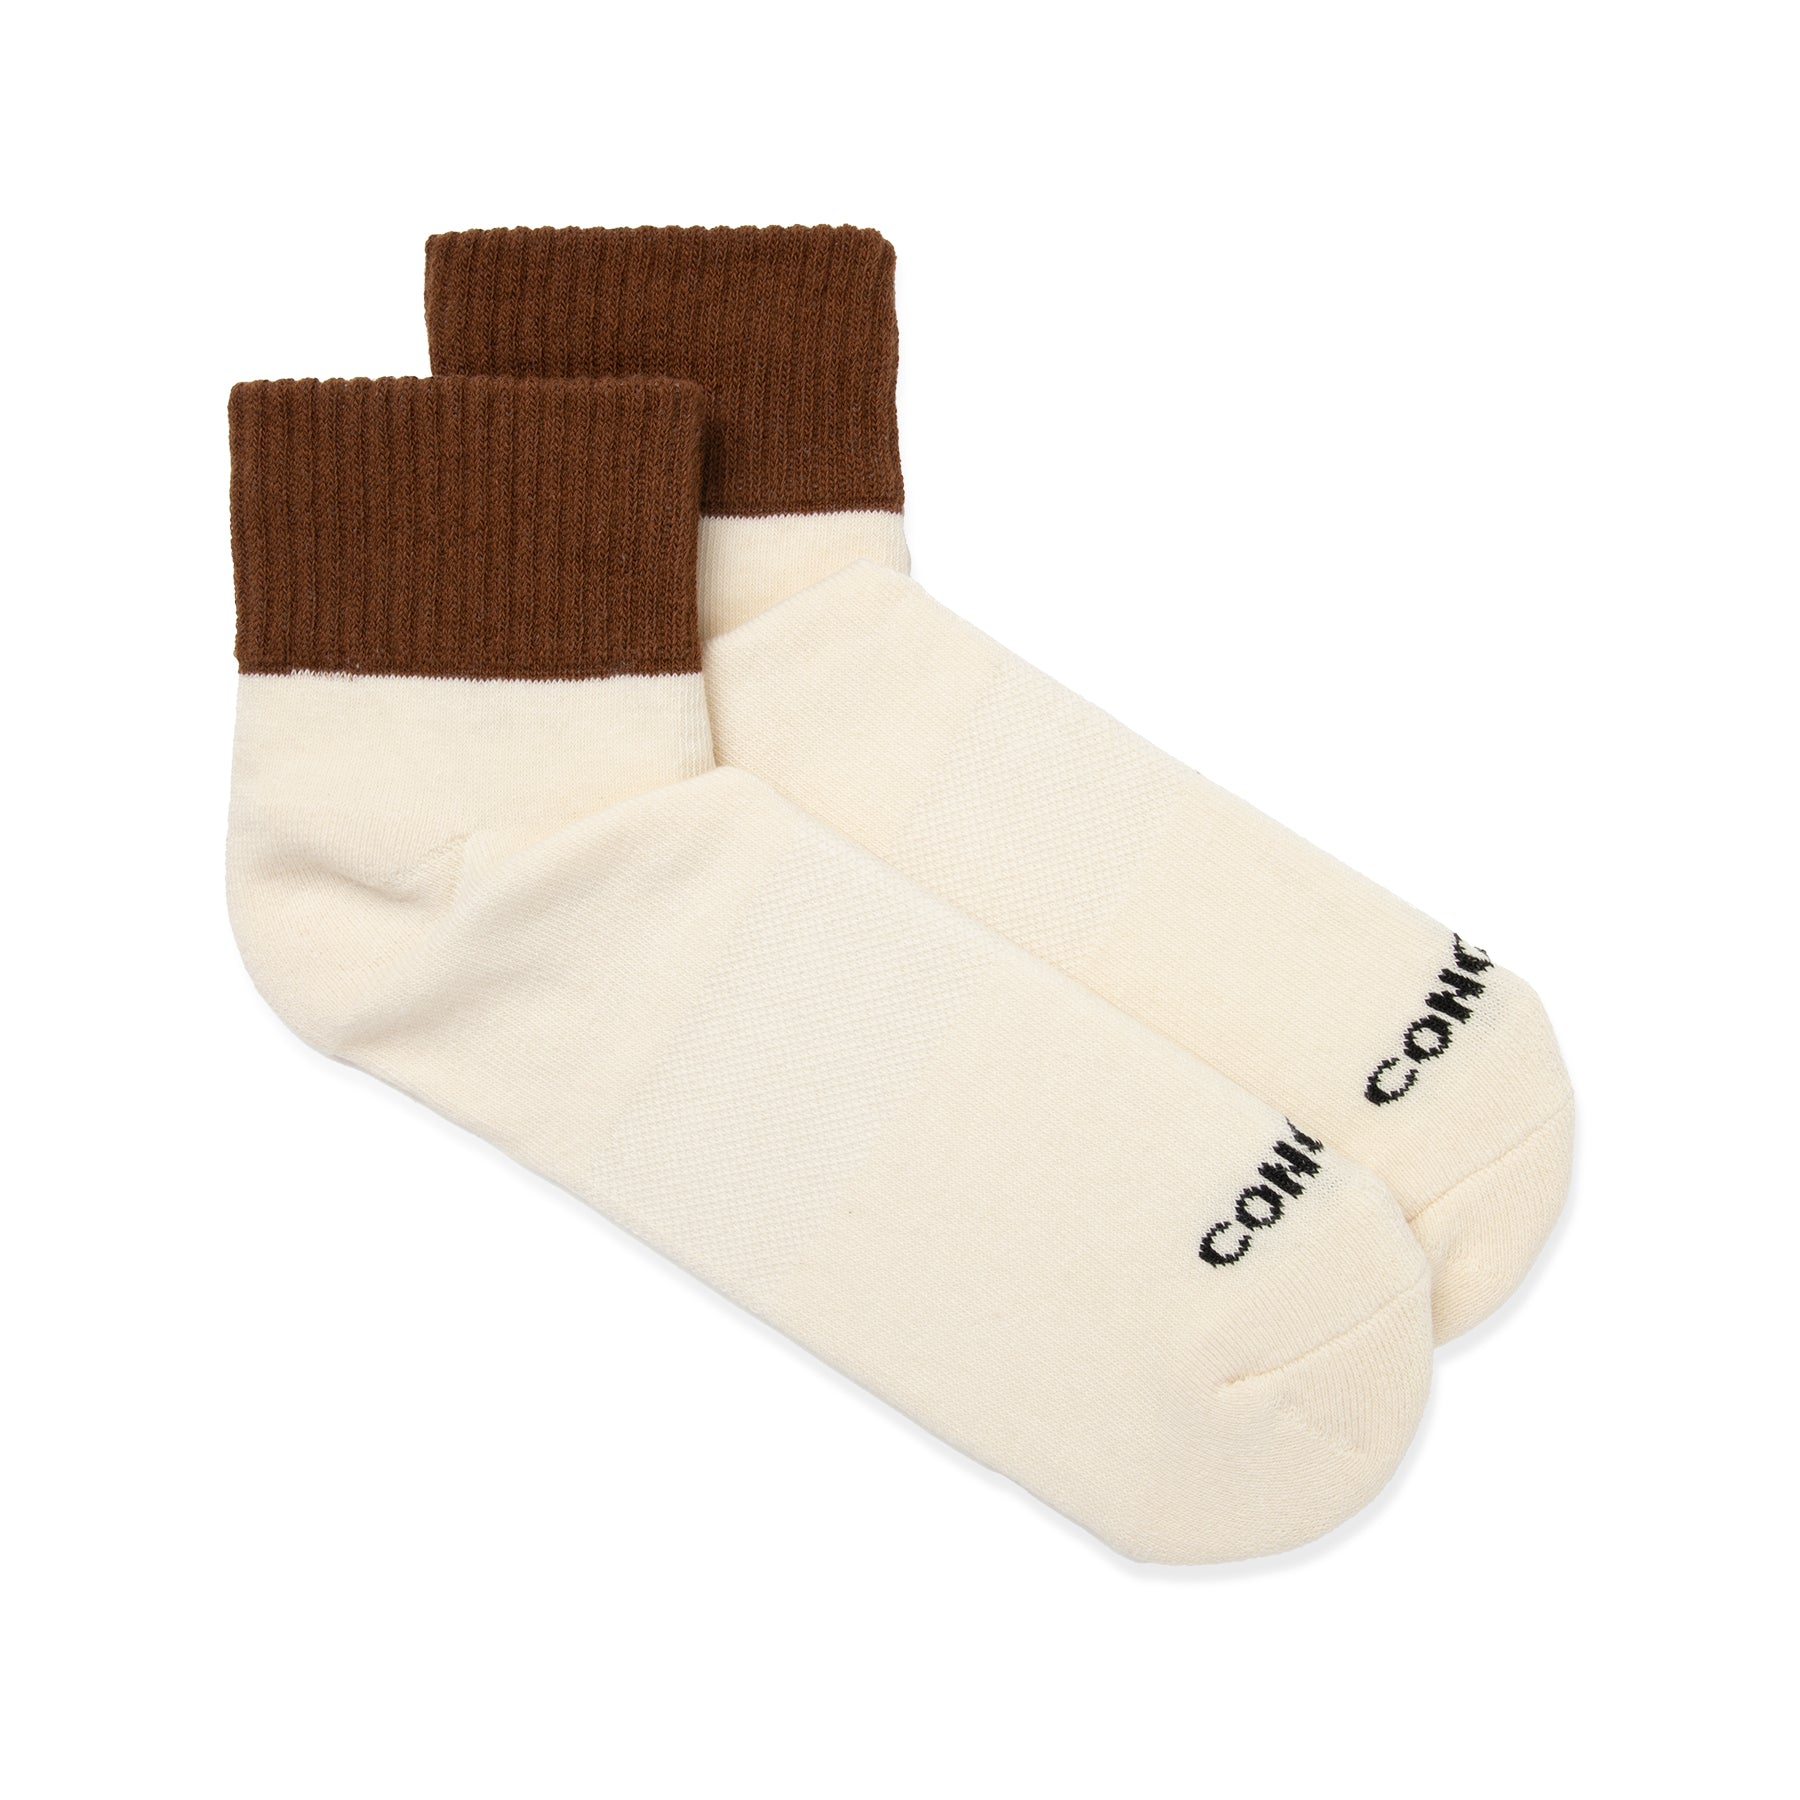 Socks – Concepts